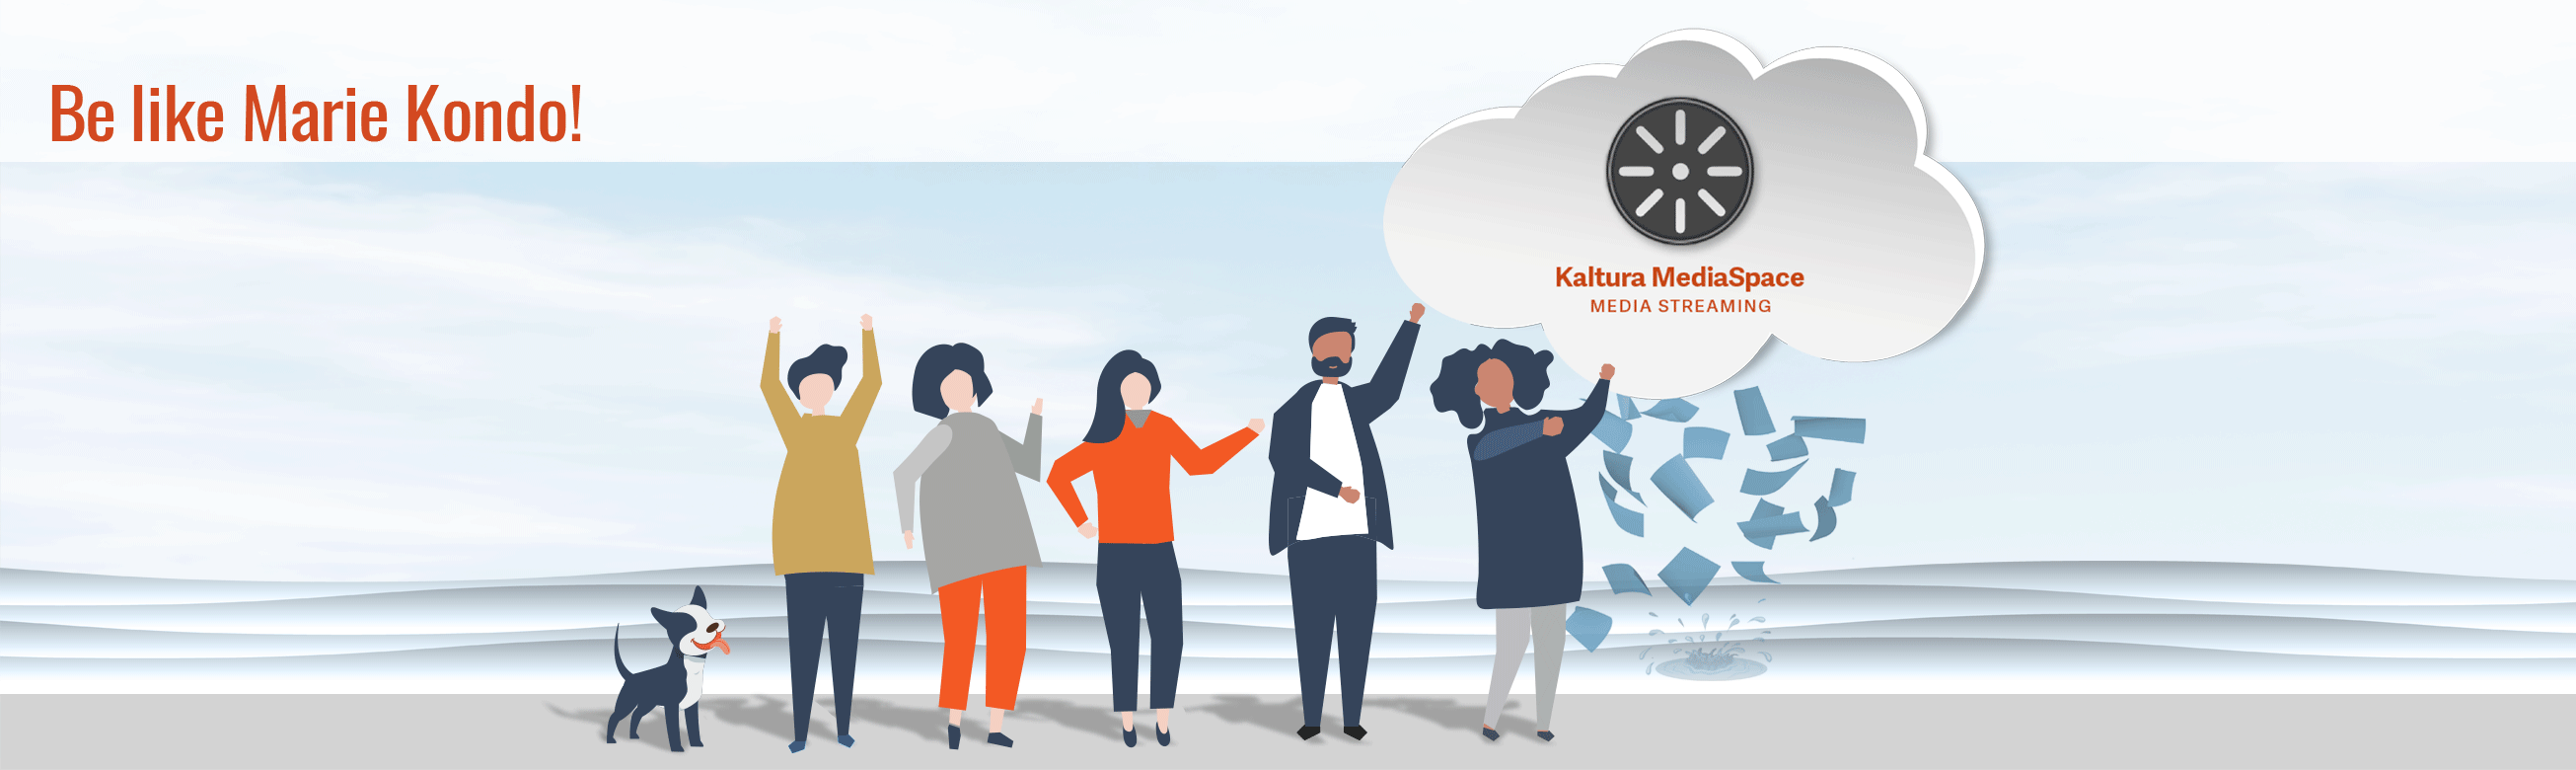 five cartoon figures underneath a cloud that reads Kaltura MediaSpace